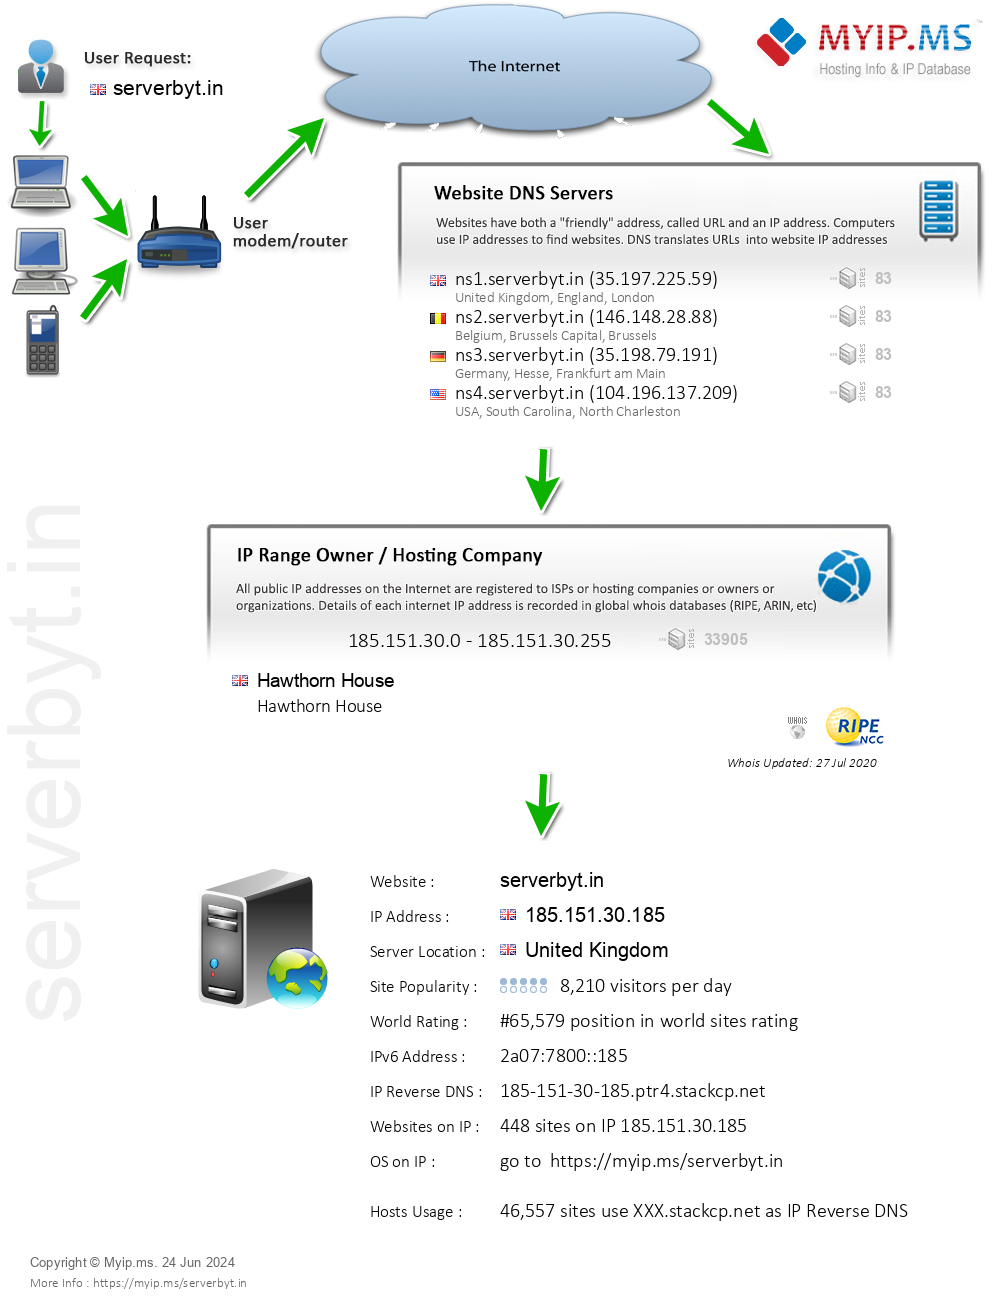 Serverbyt.in - Website Hosting Visual IP Diagram